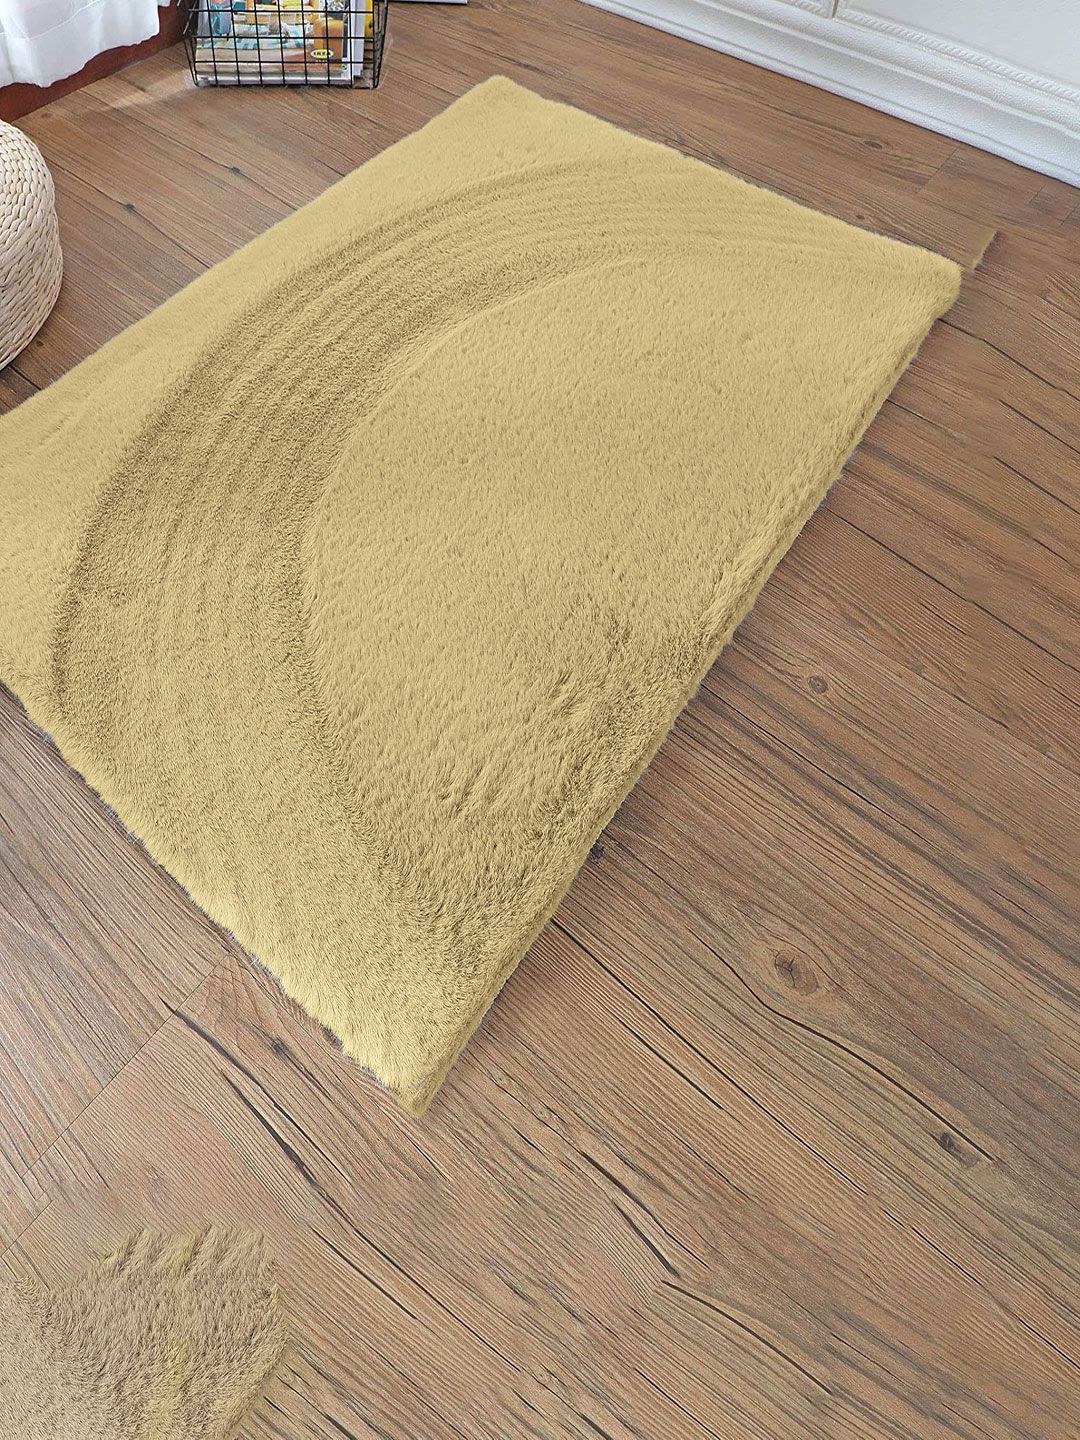 LUXEHOME INTERNATIONAL Golden Solid Anti-Skid Doormat Price in India